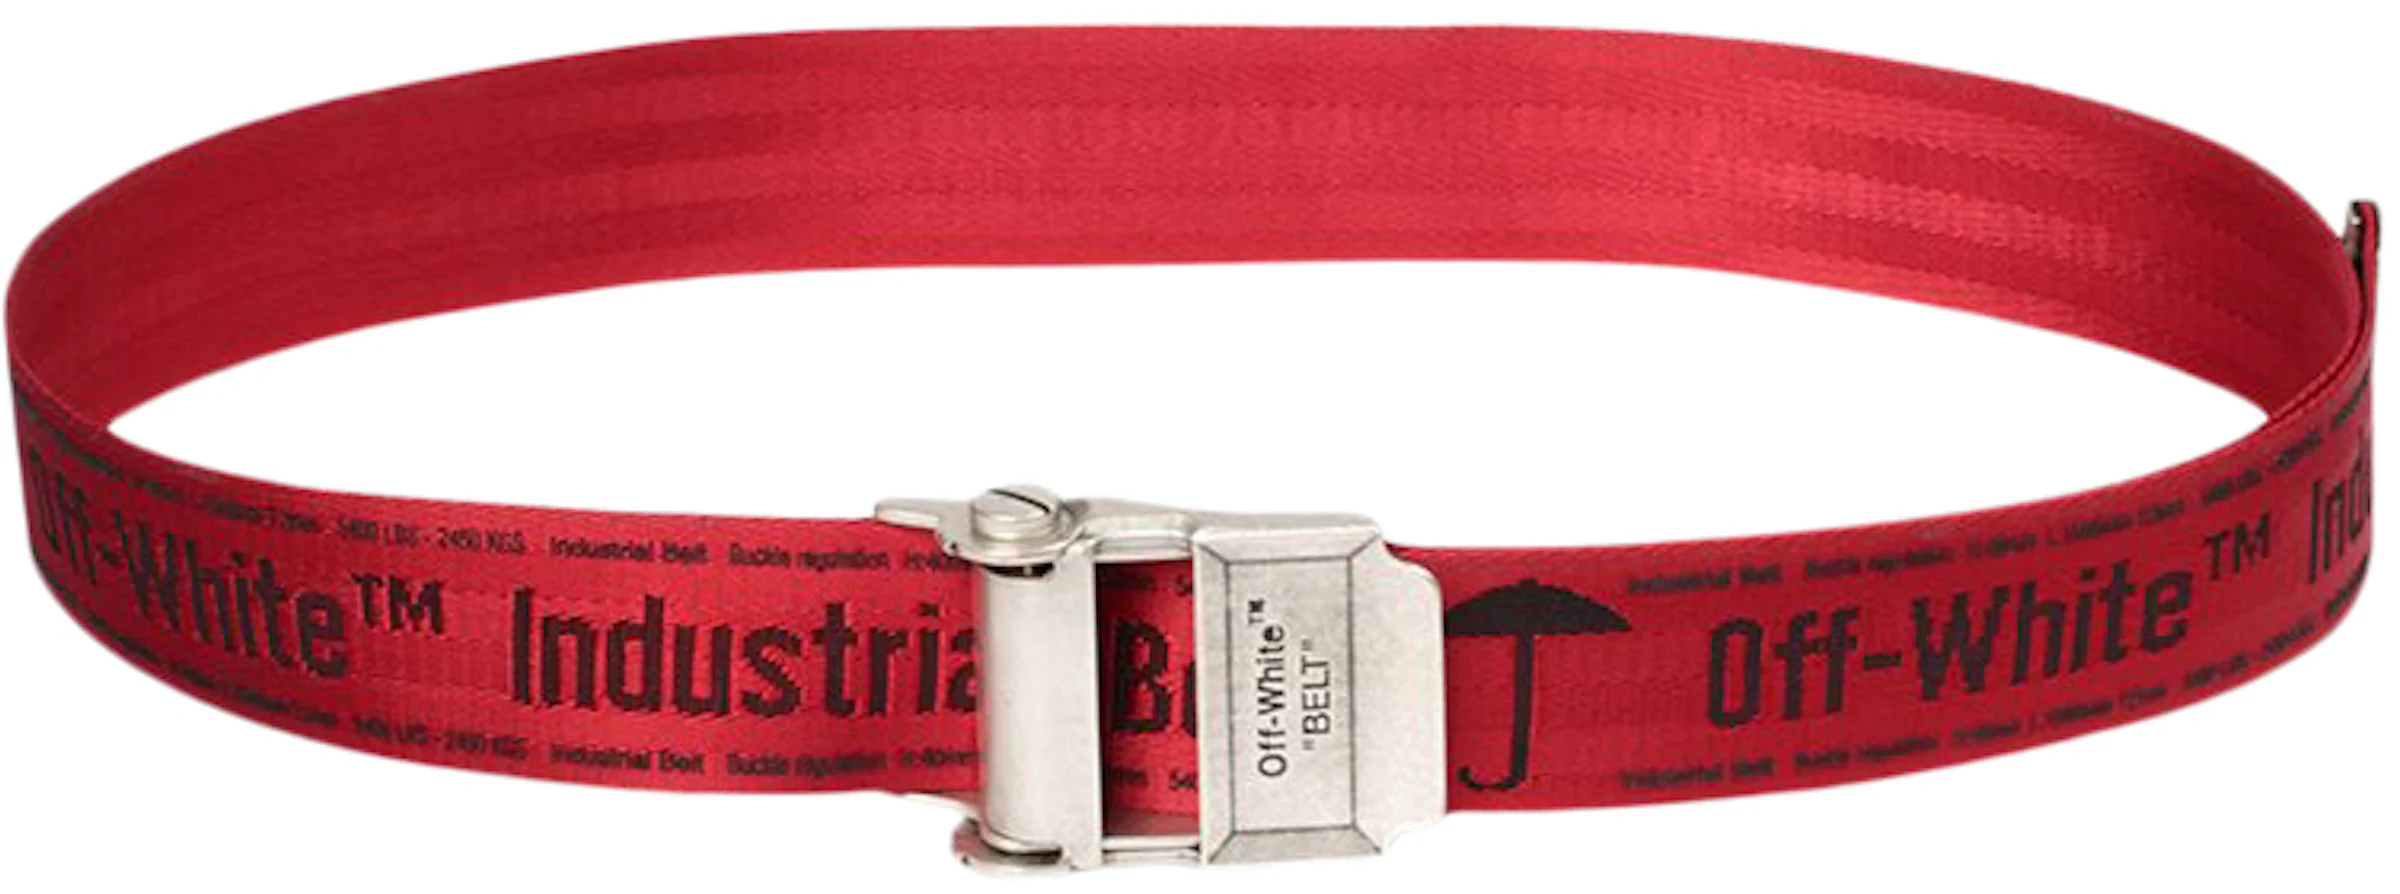 OFF-WHITE Short 2.0 Industrial Belt Red/Black/No Color - SS20 - US